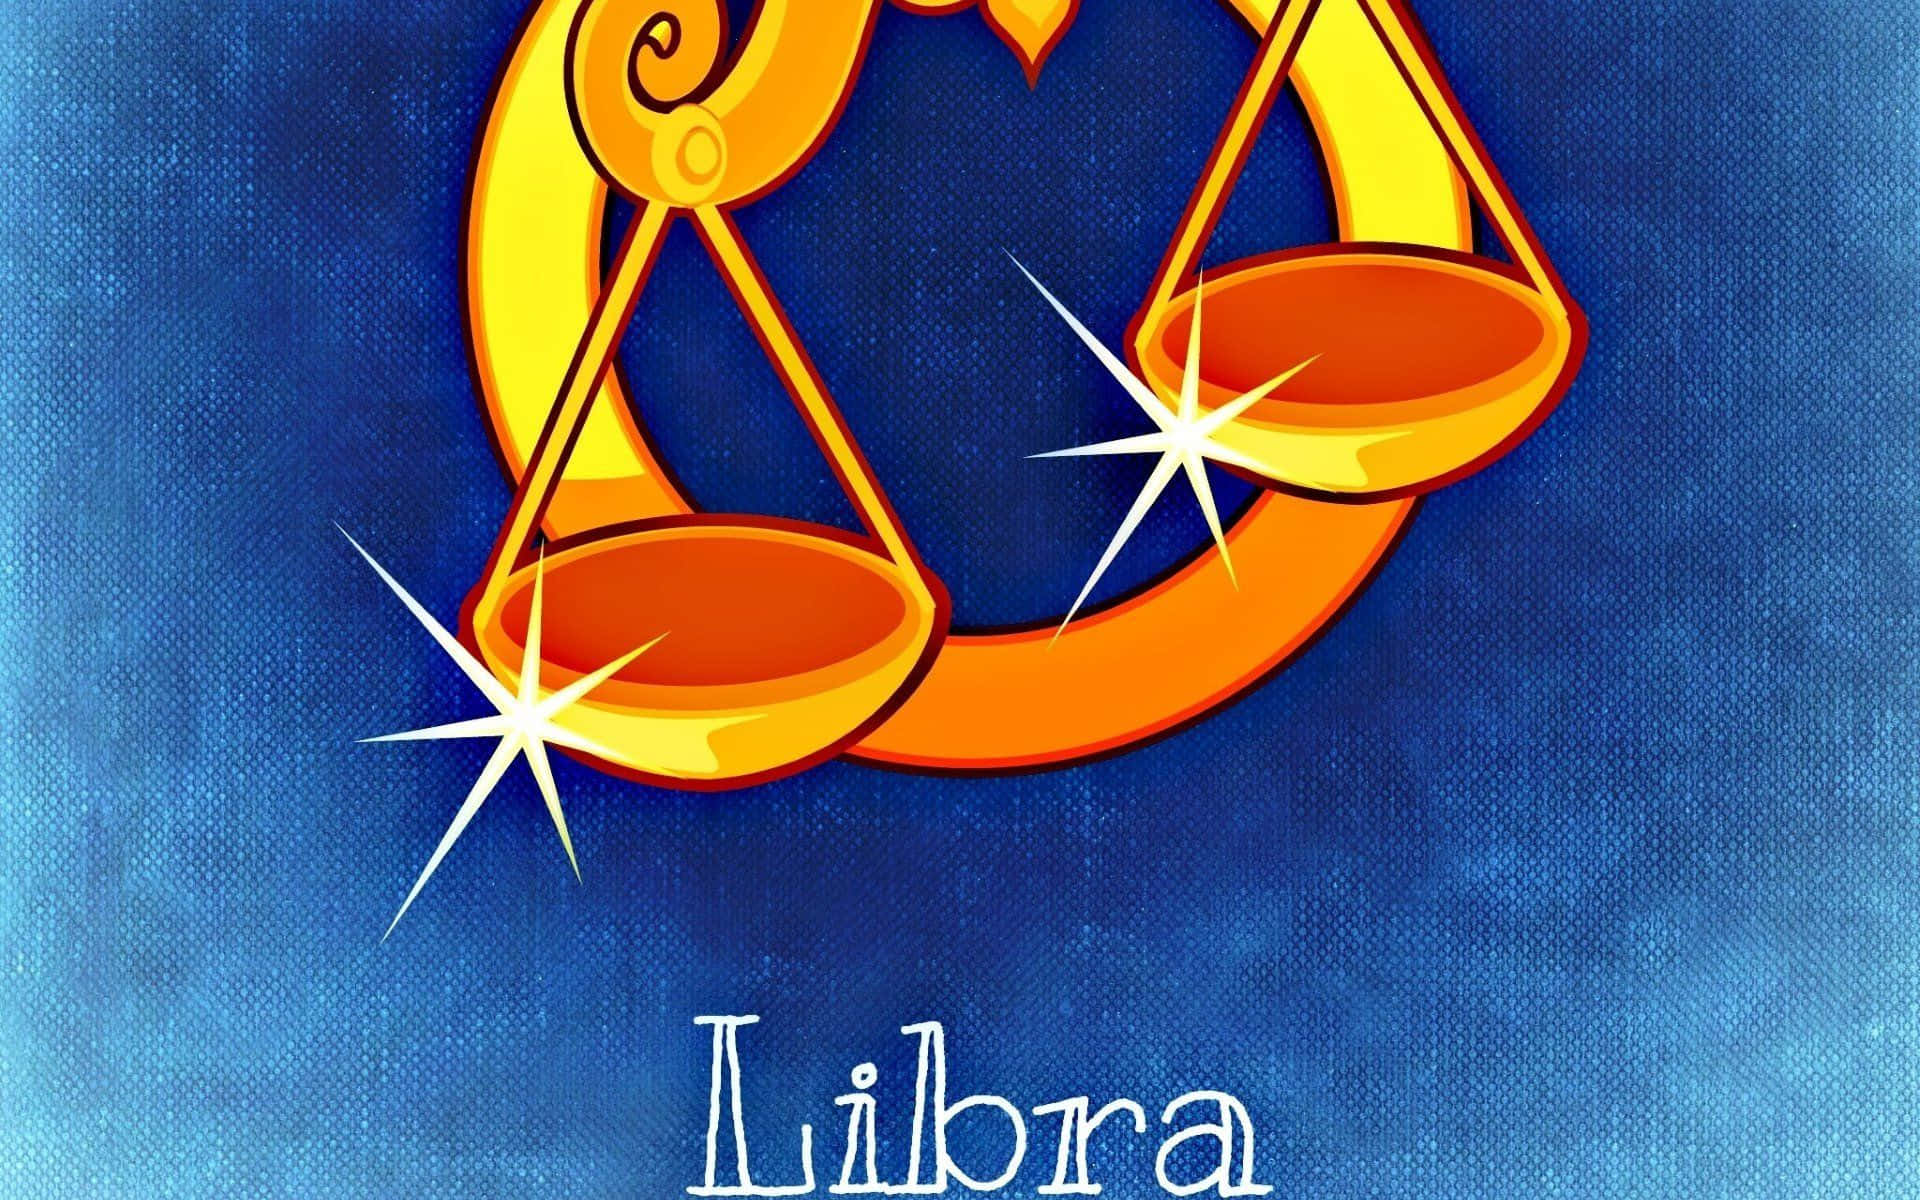 Beautiful Libra Zodiac Sign in Stunning Design